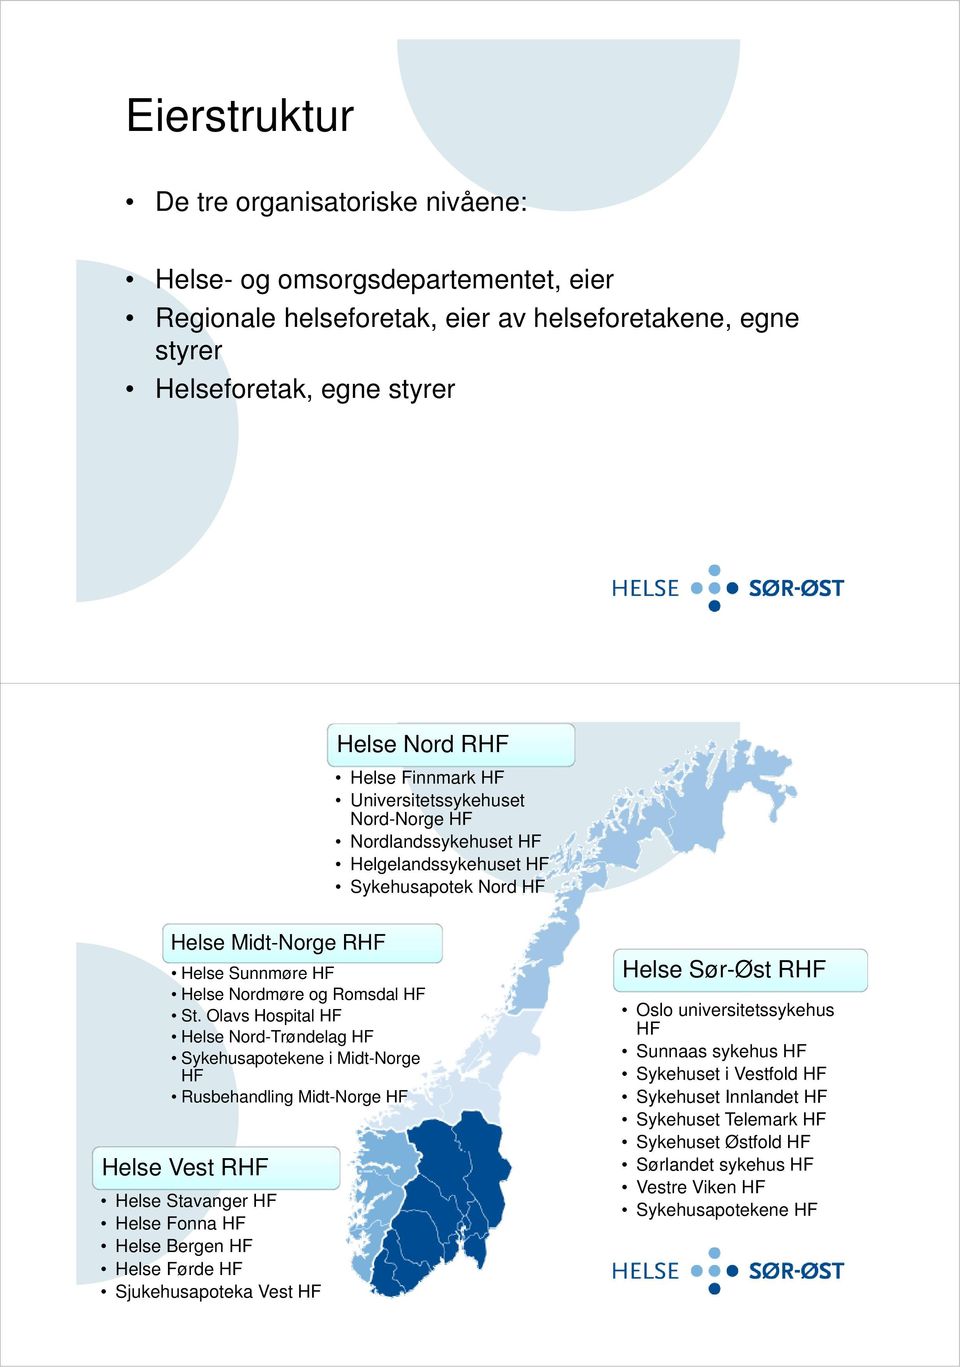 Olavs Hospital HF Helse Nord-Trøndelag HF Sykehusapotekene i Midt-Norge HF Rusbehandling Midt-Norge HF Helse Vest RHF Helse Stavanger HF Helse Fonna HF Helse Bergen HF Helse Førde HF Sjukehusapoteka